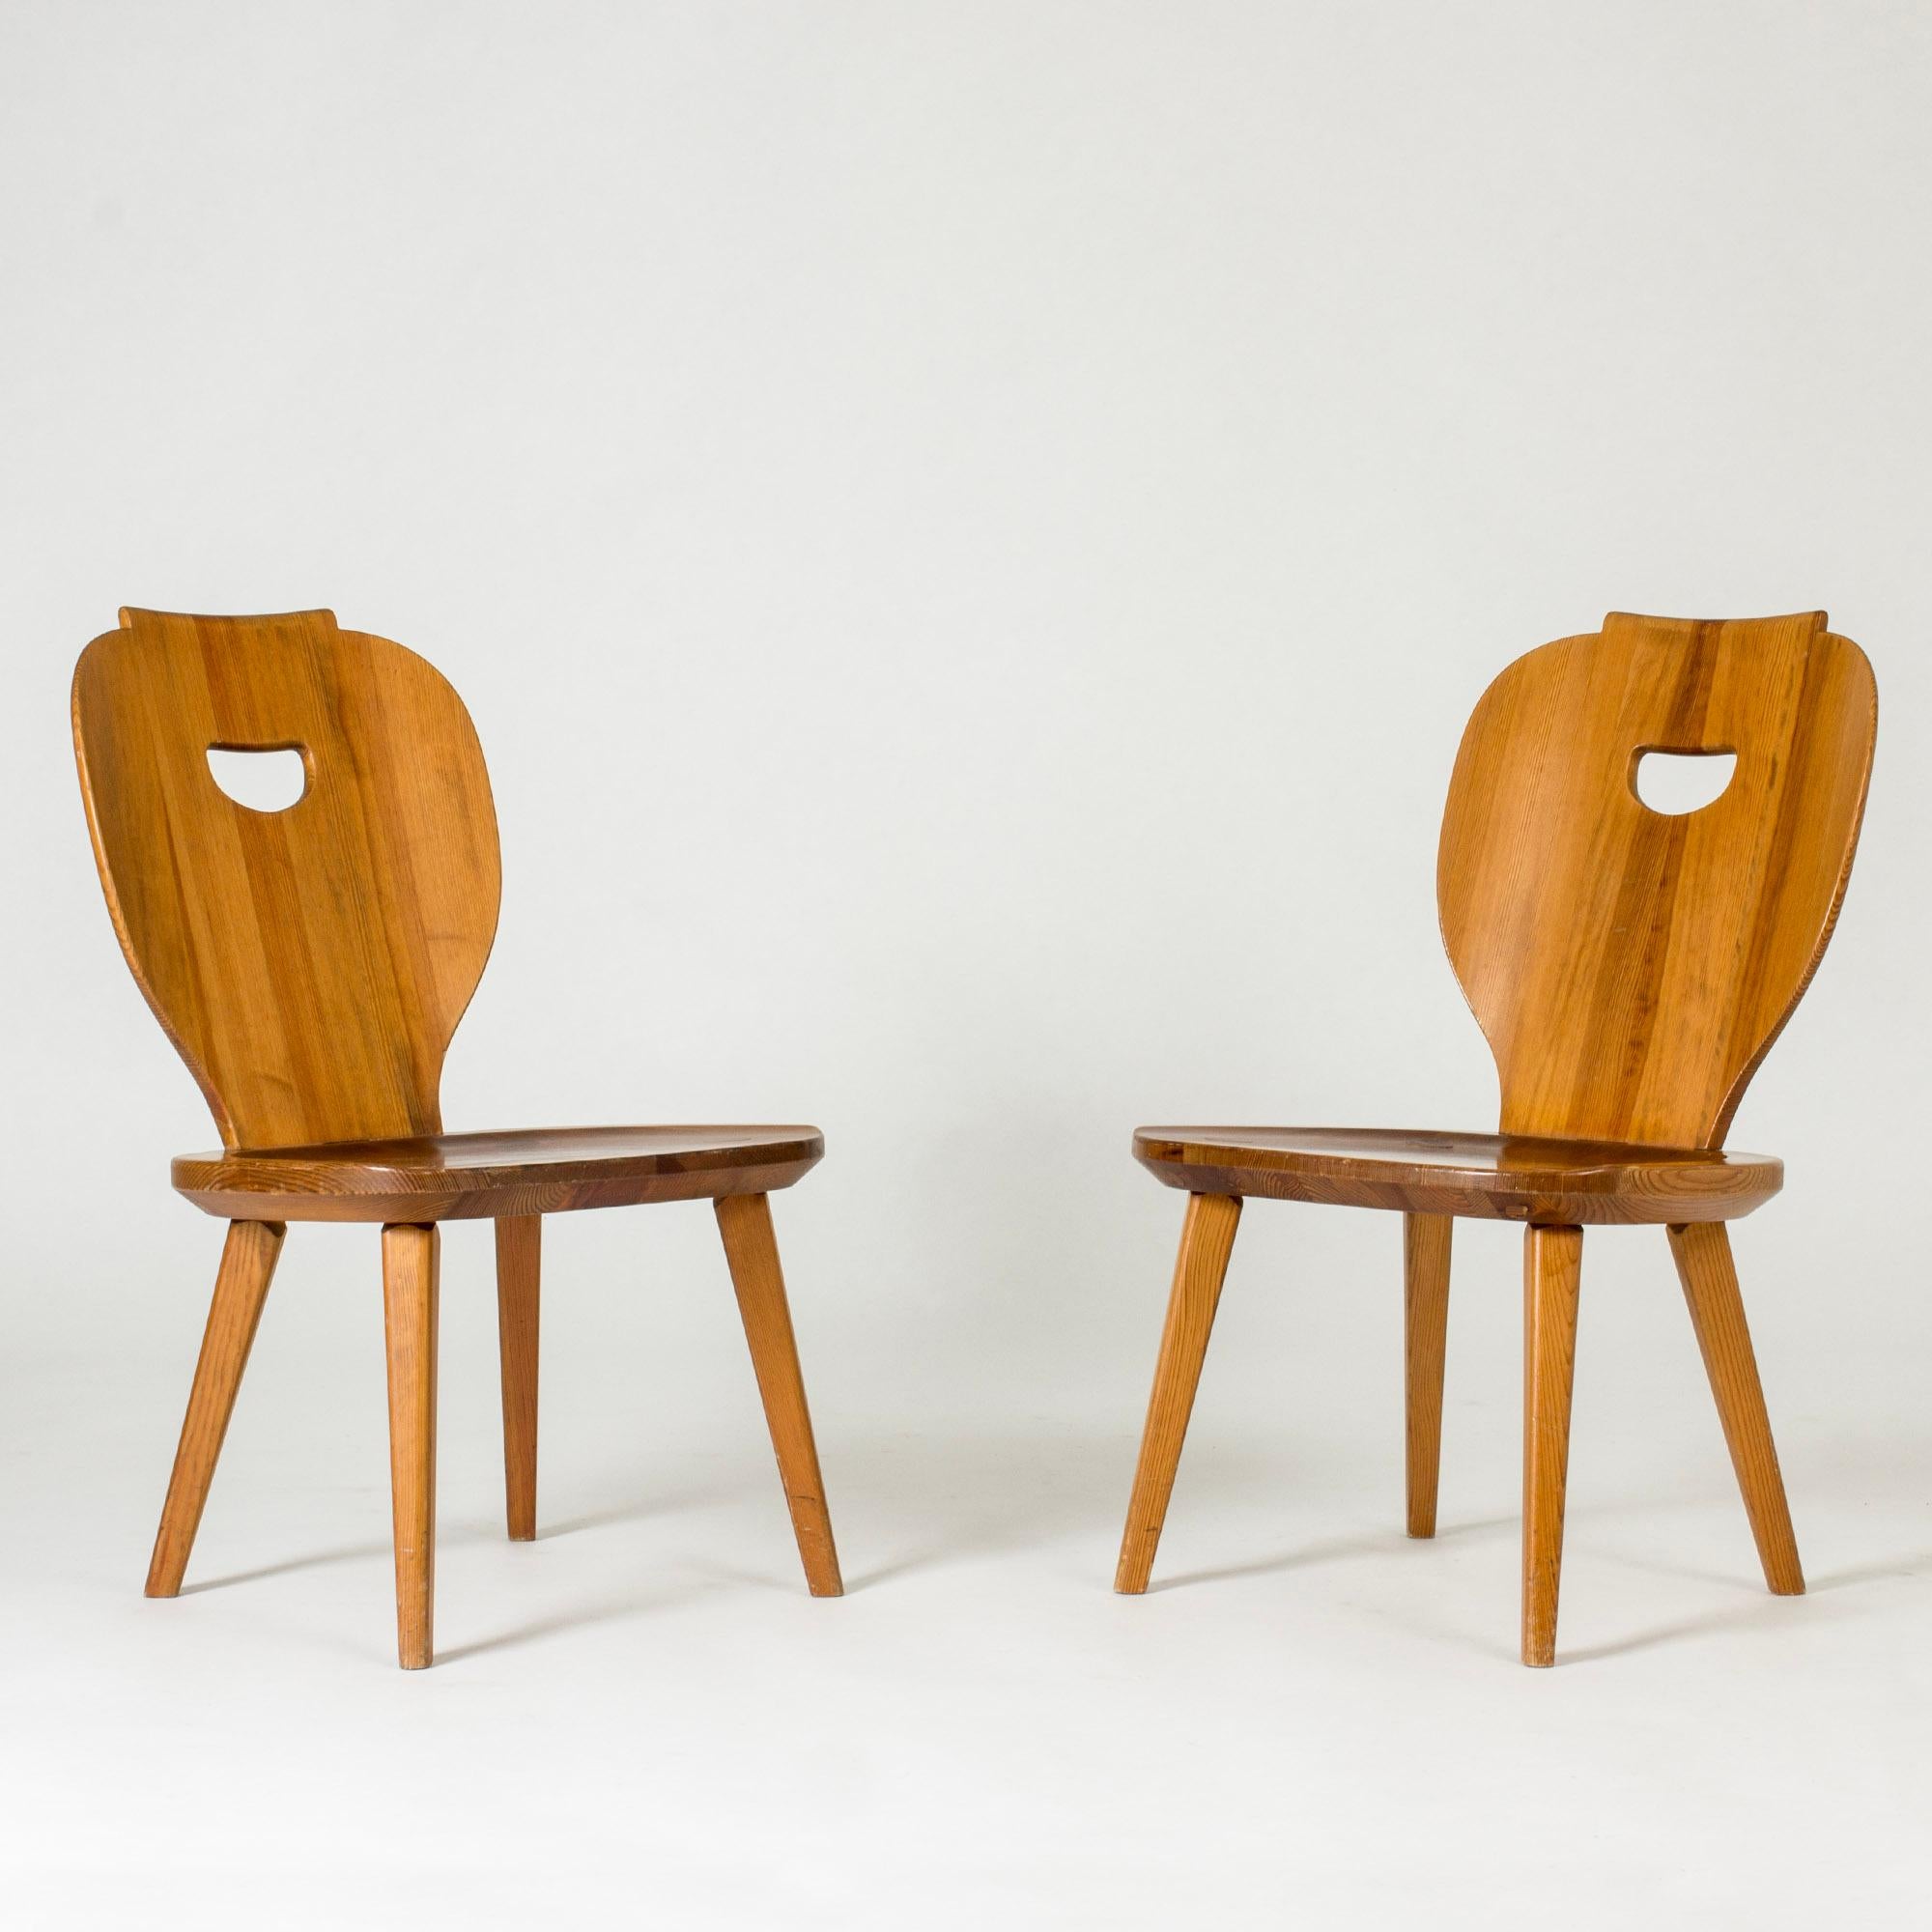 Mid-20th Century Midcentury Modern Pine Side Chair by Carl Malmsten, Svensk Fur, Sweden, 1940s For Sale